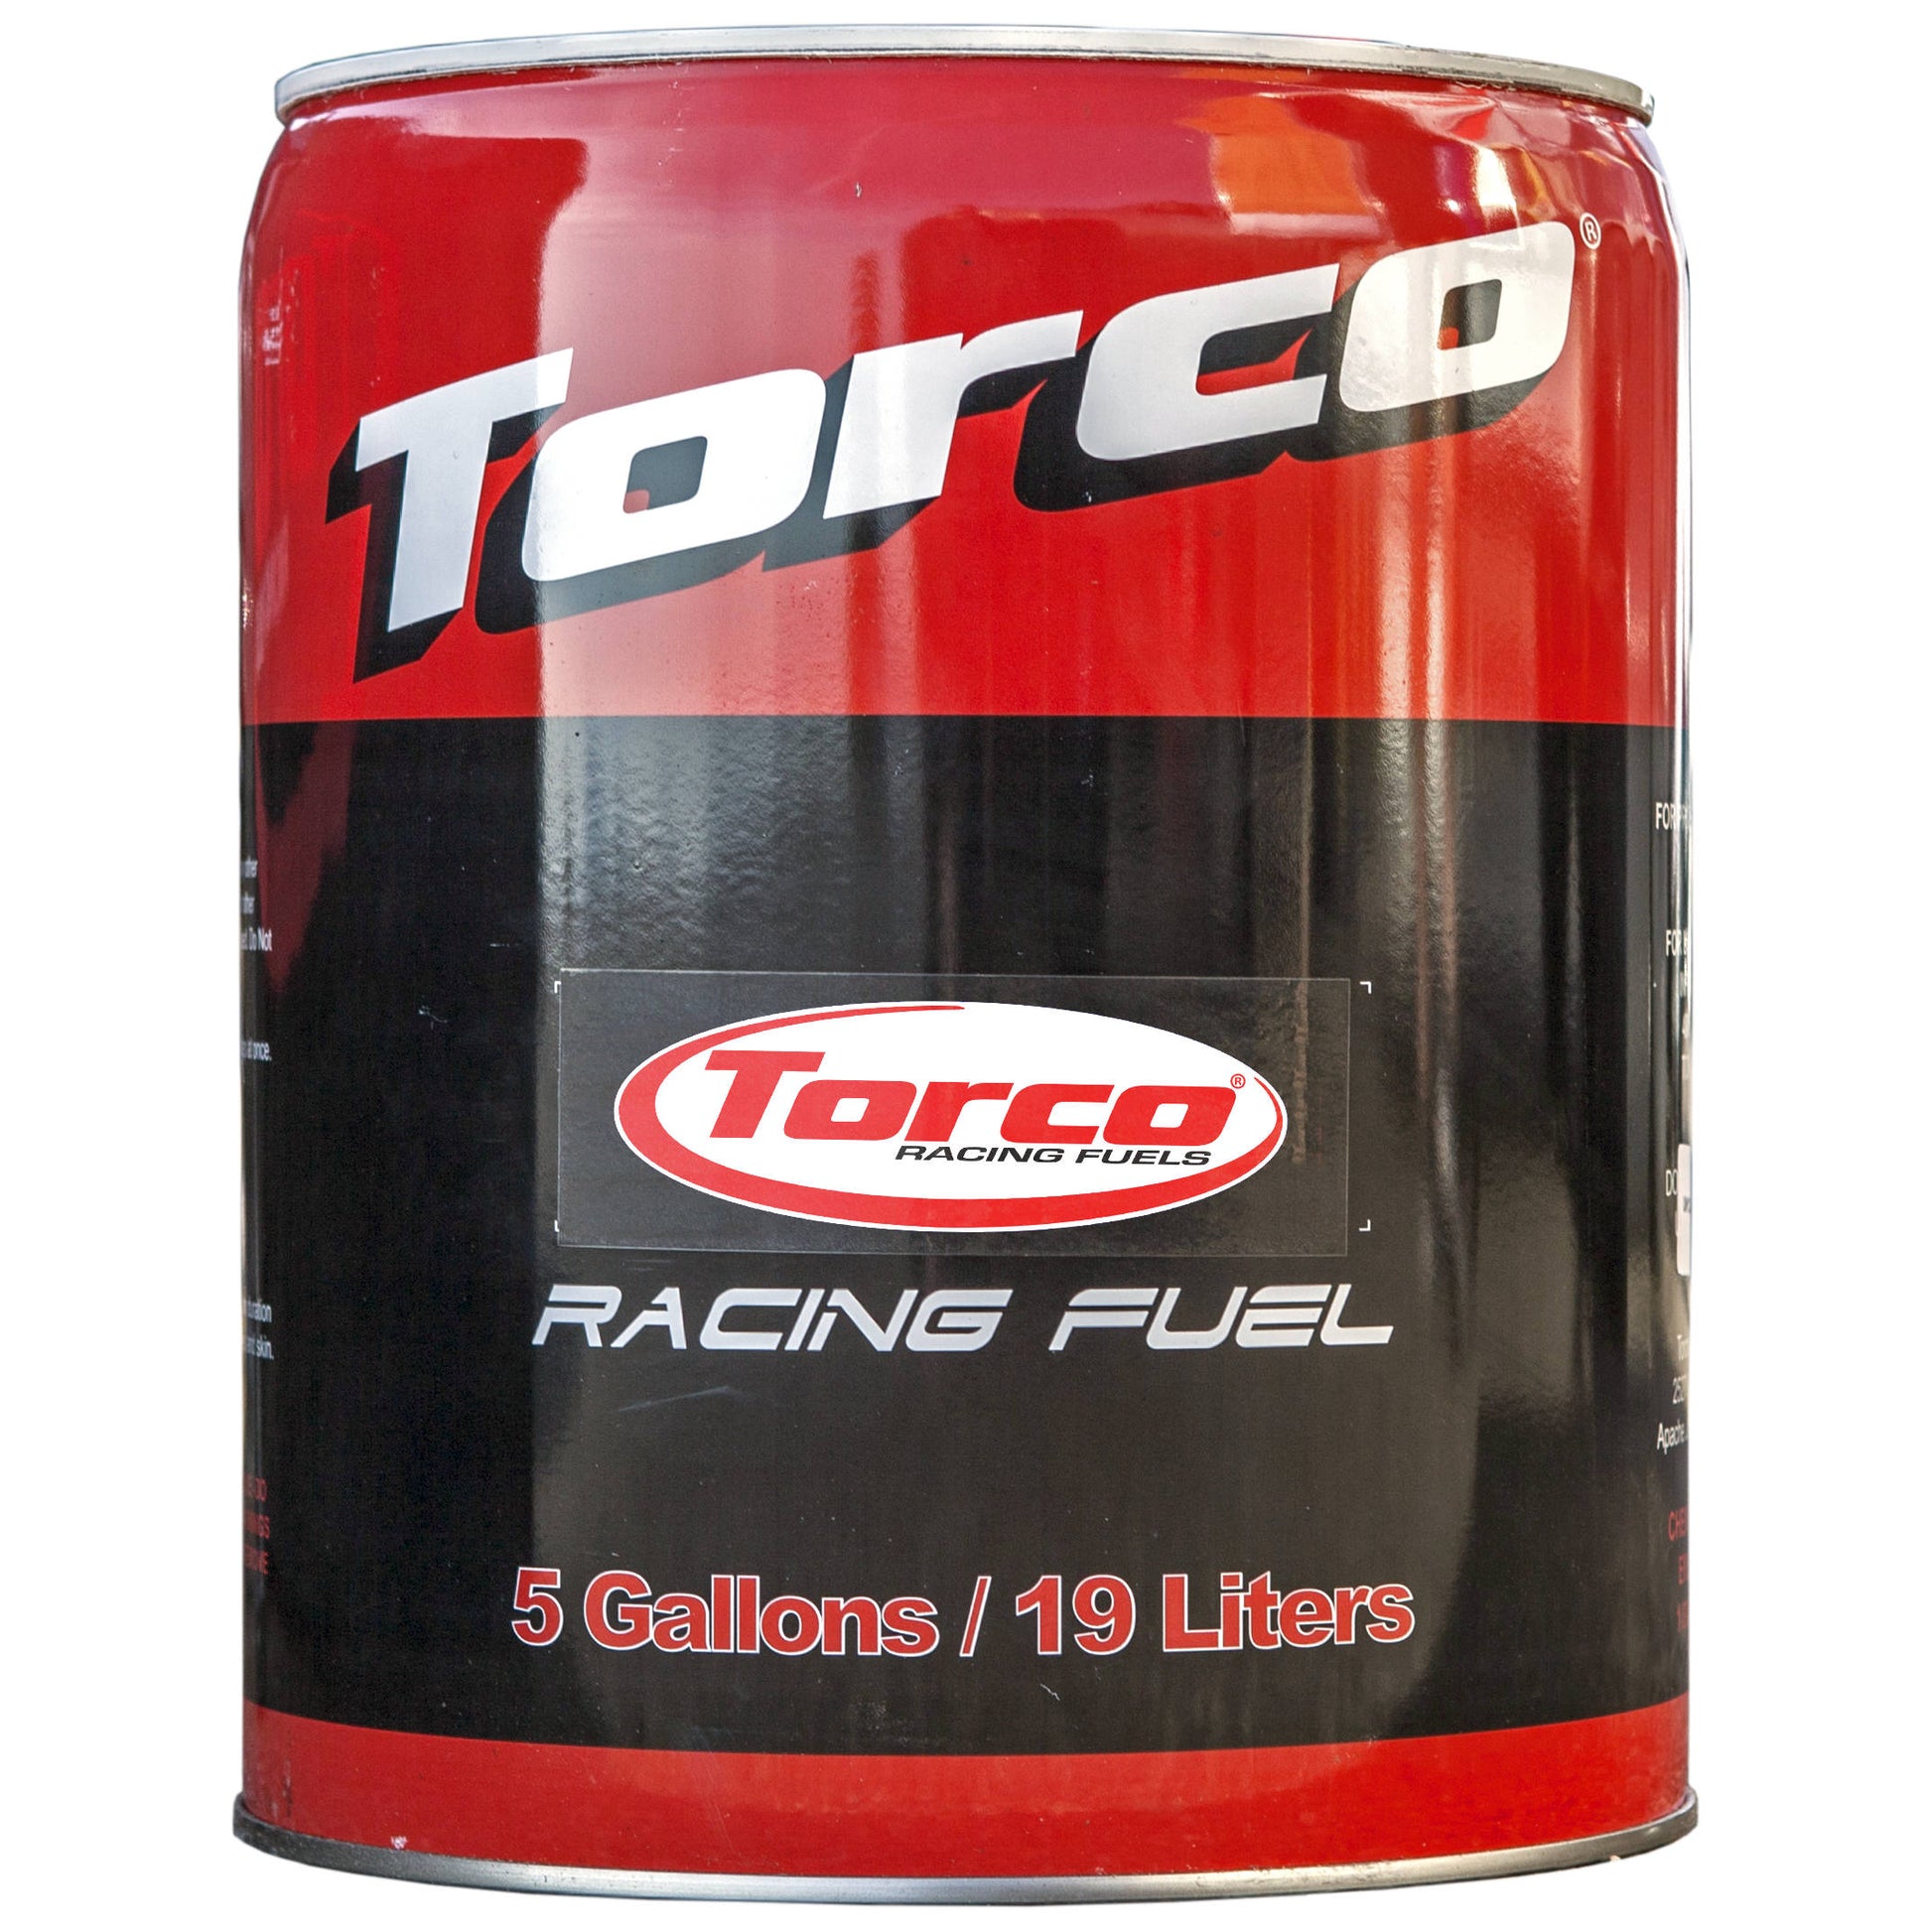 Torco Race Fuel 100 Unleaded 5 gal pail